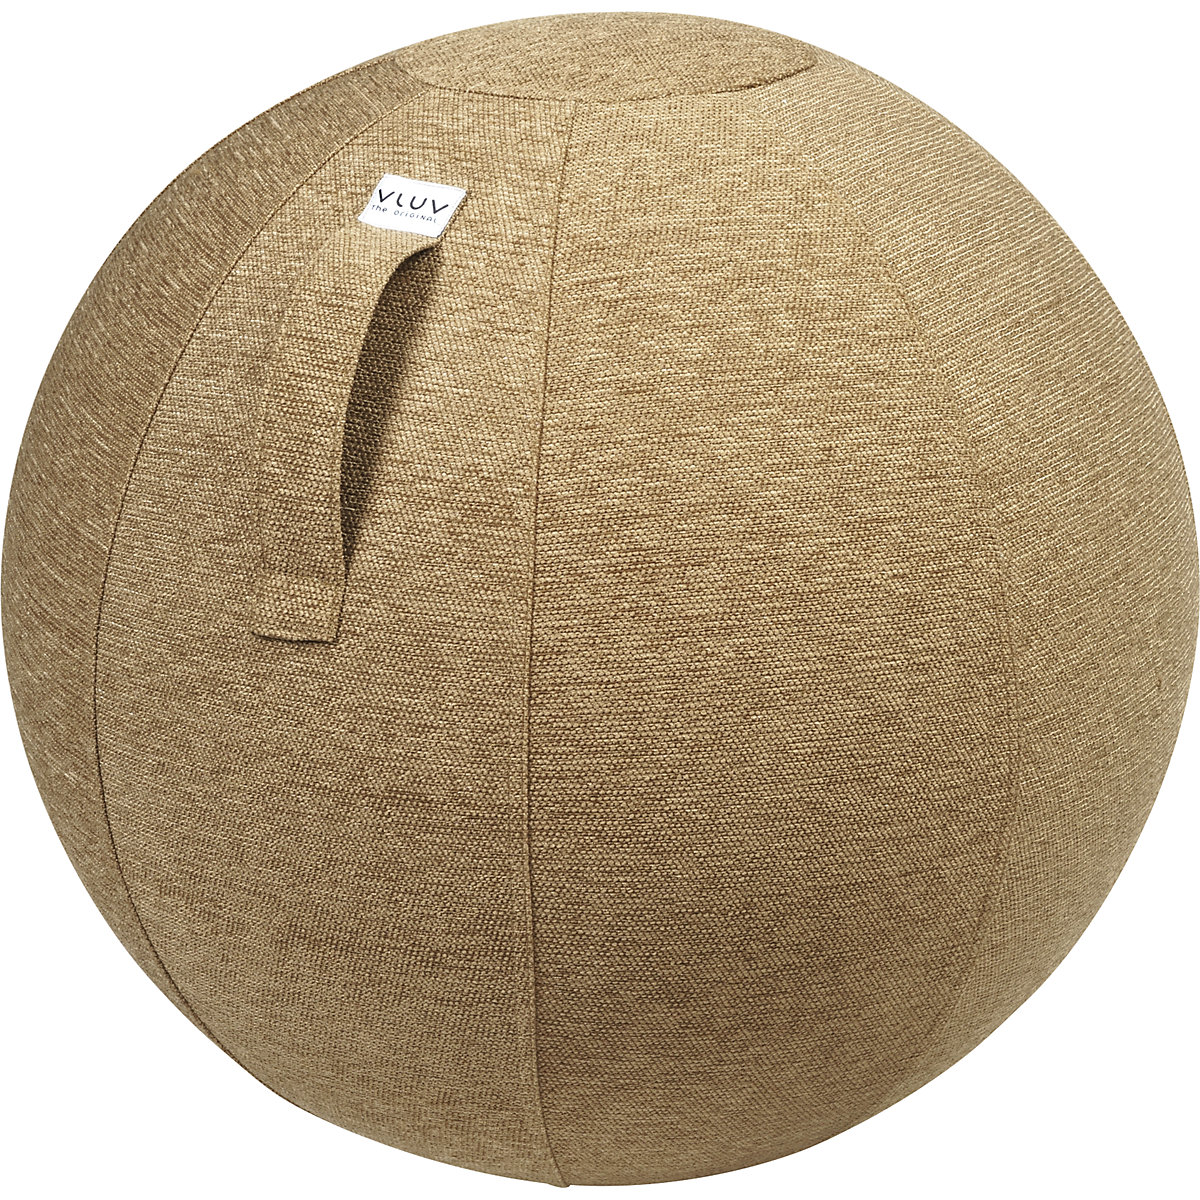 STOV Swiss ball – VLUV, fabric version, 600 – 650 mm, macchiato